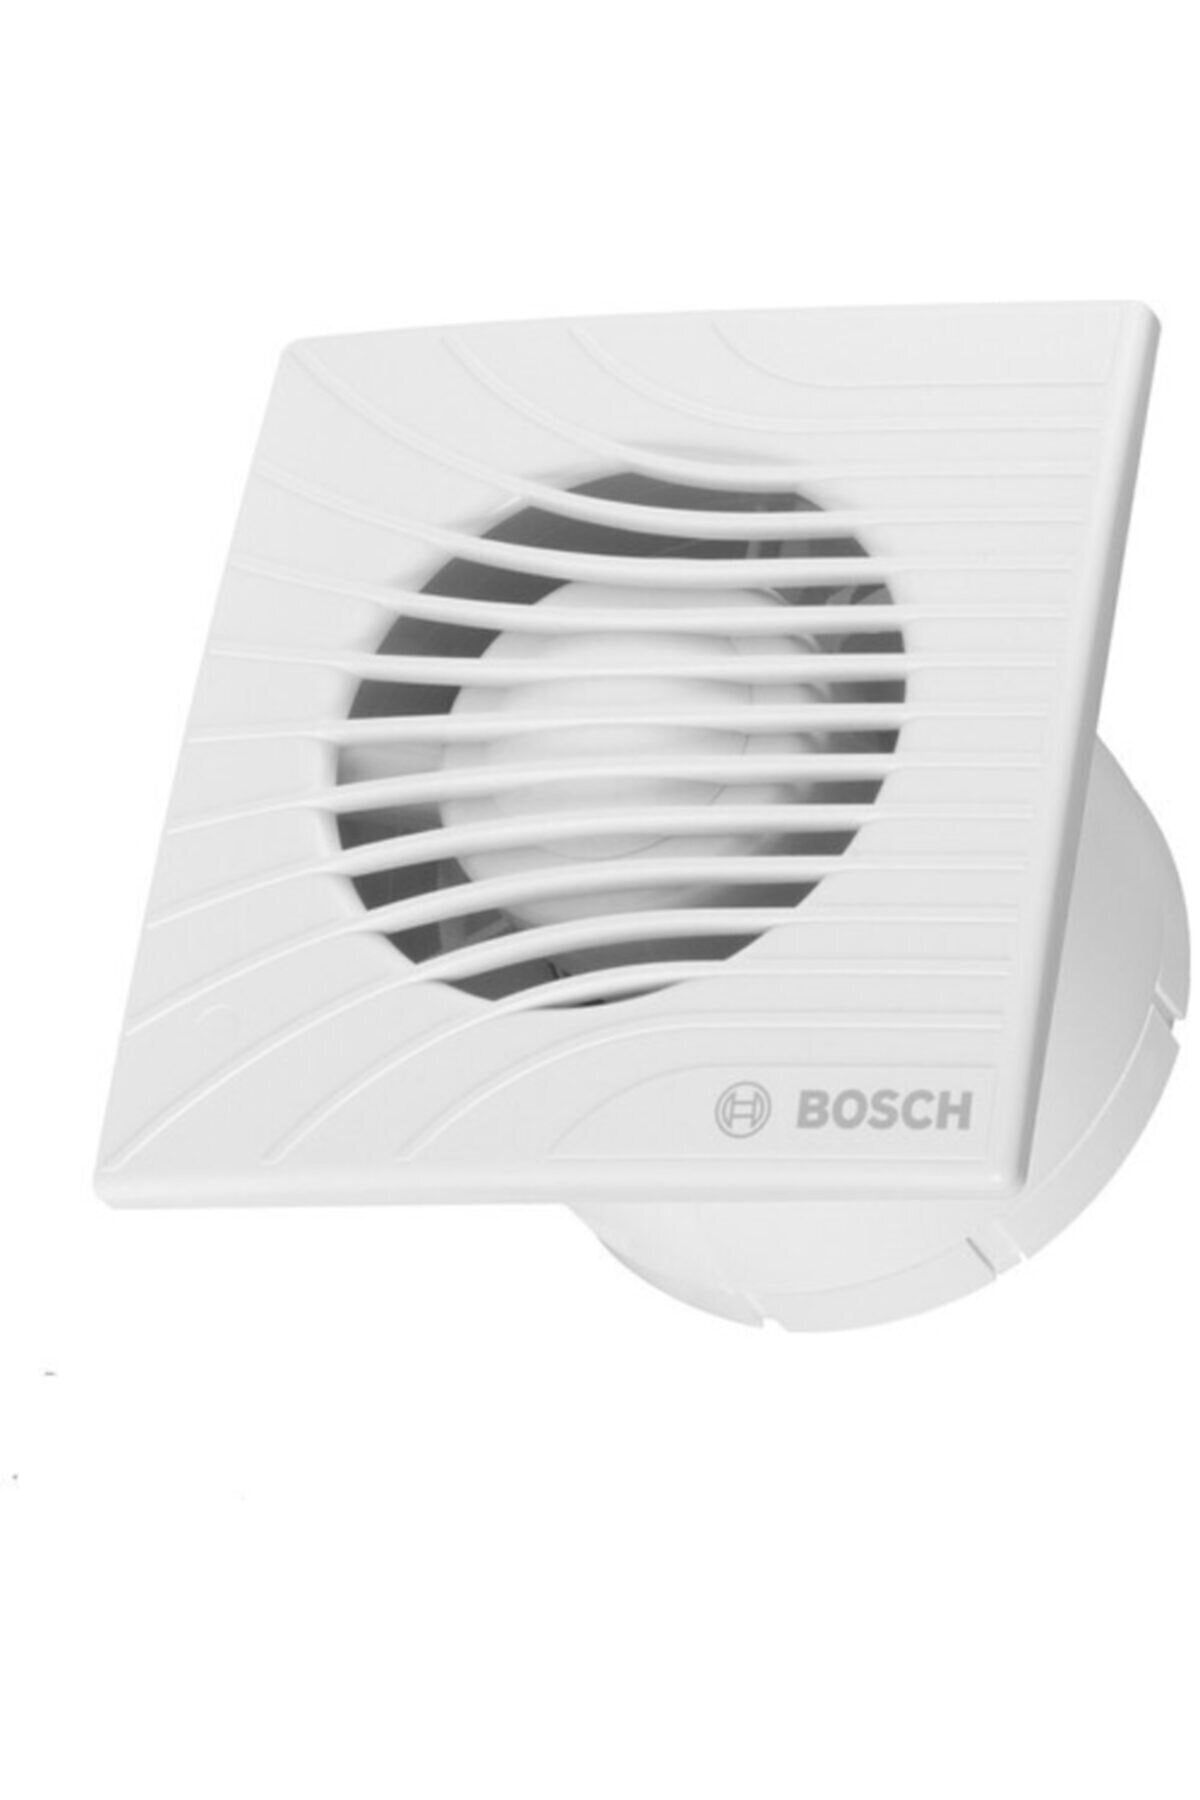 Bosch Beyaz Banyo Aspiratörü 1300 Serisi  120 mm Çap Fan